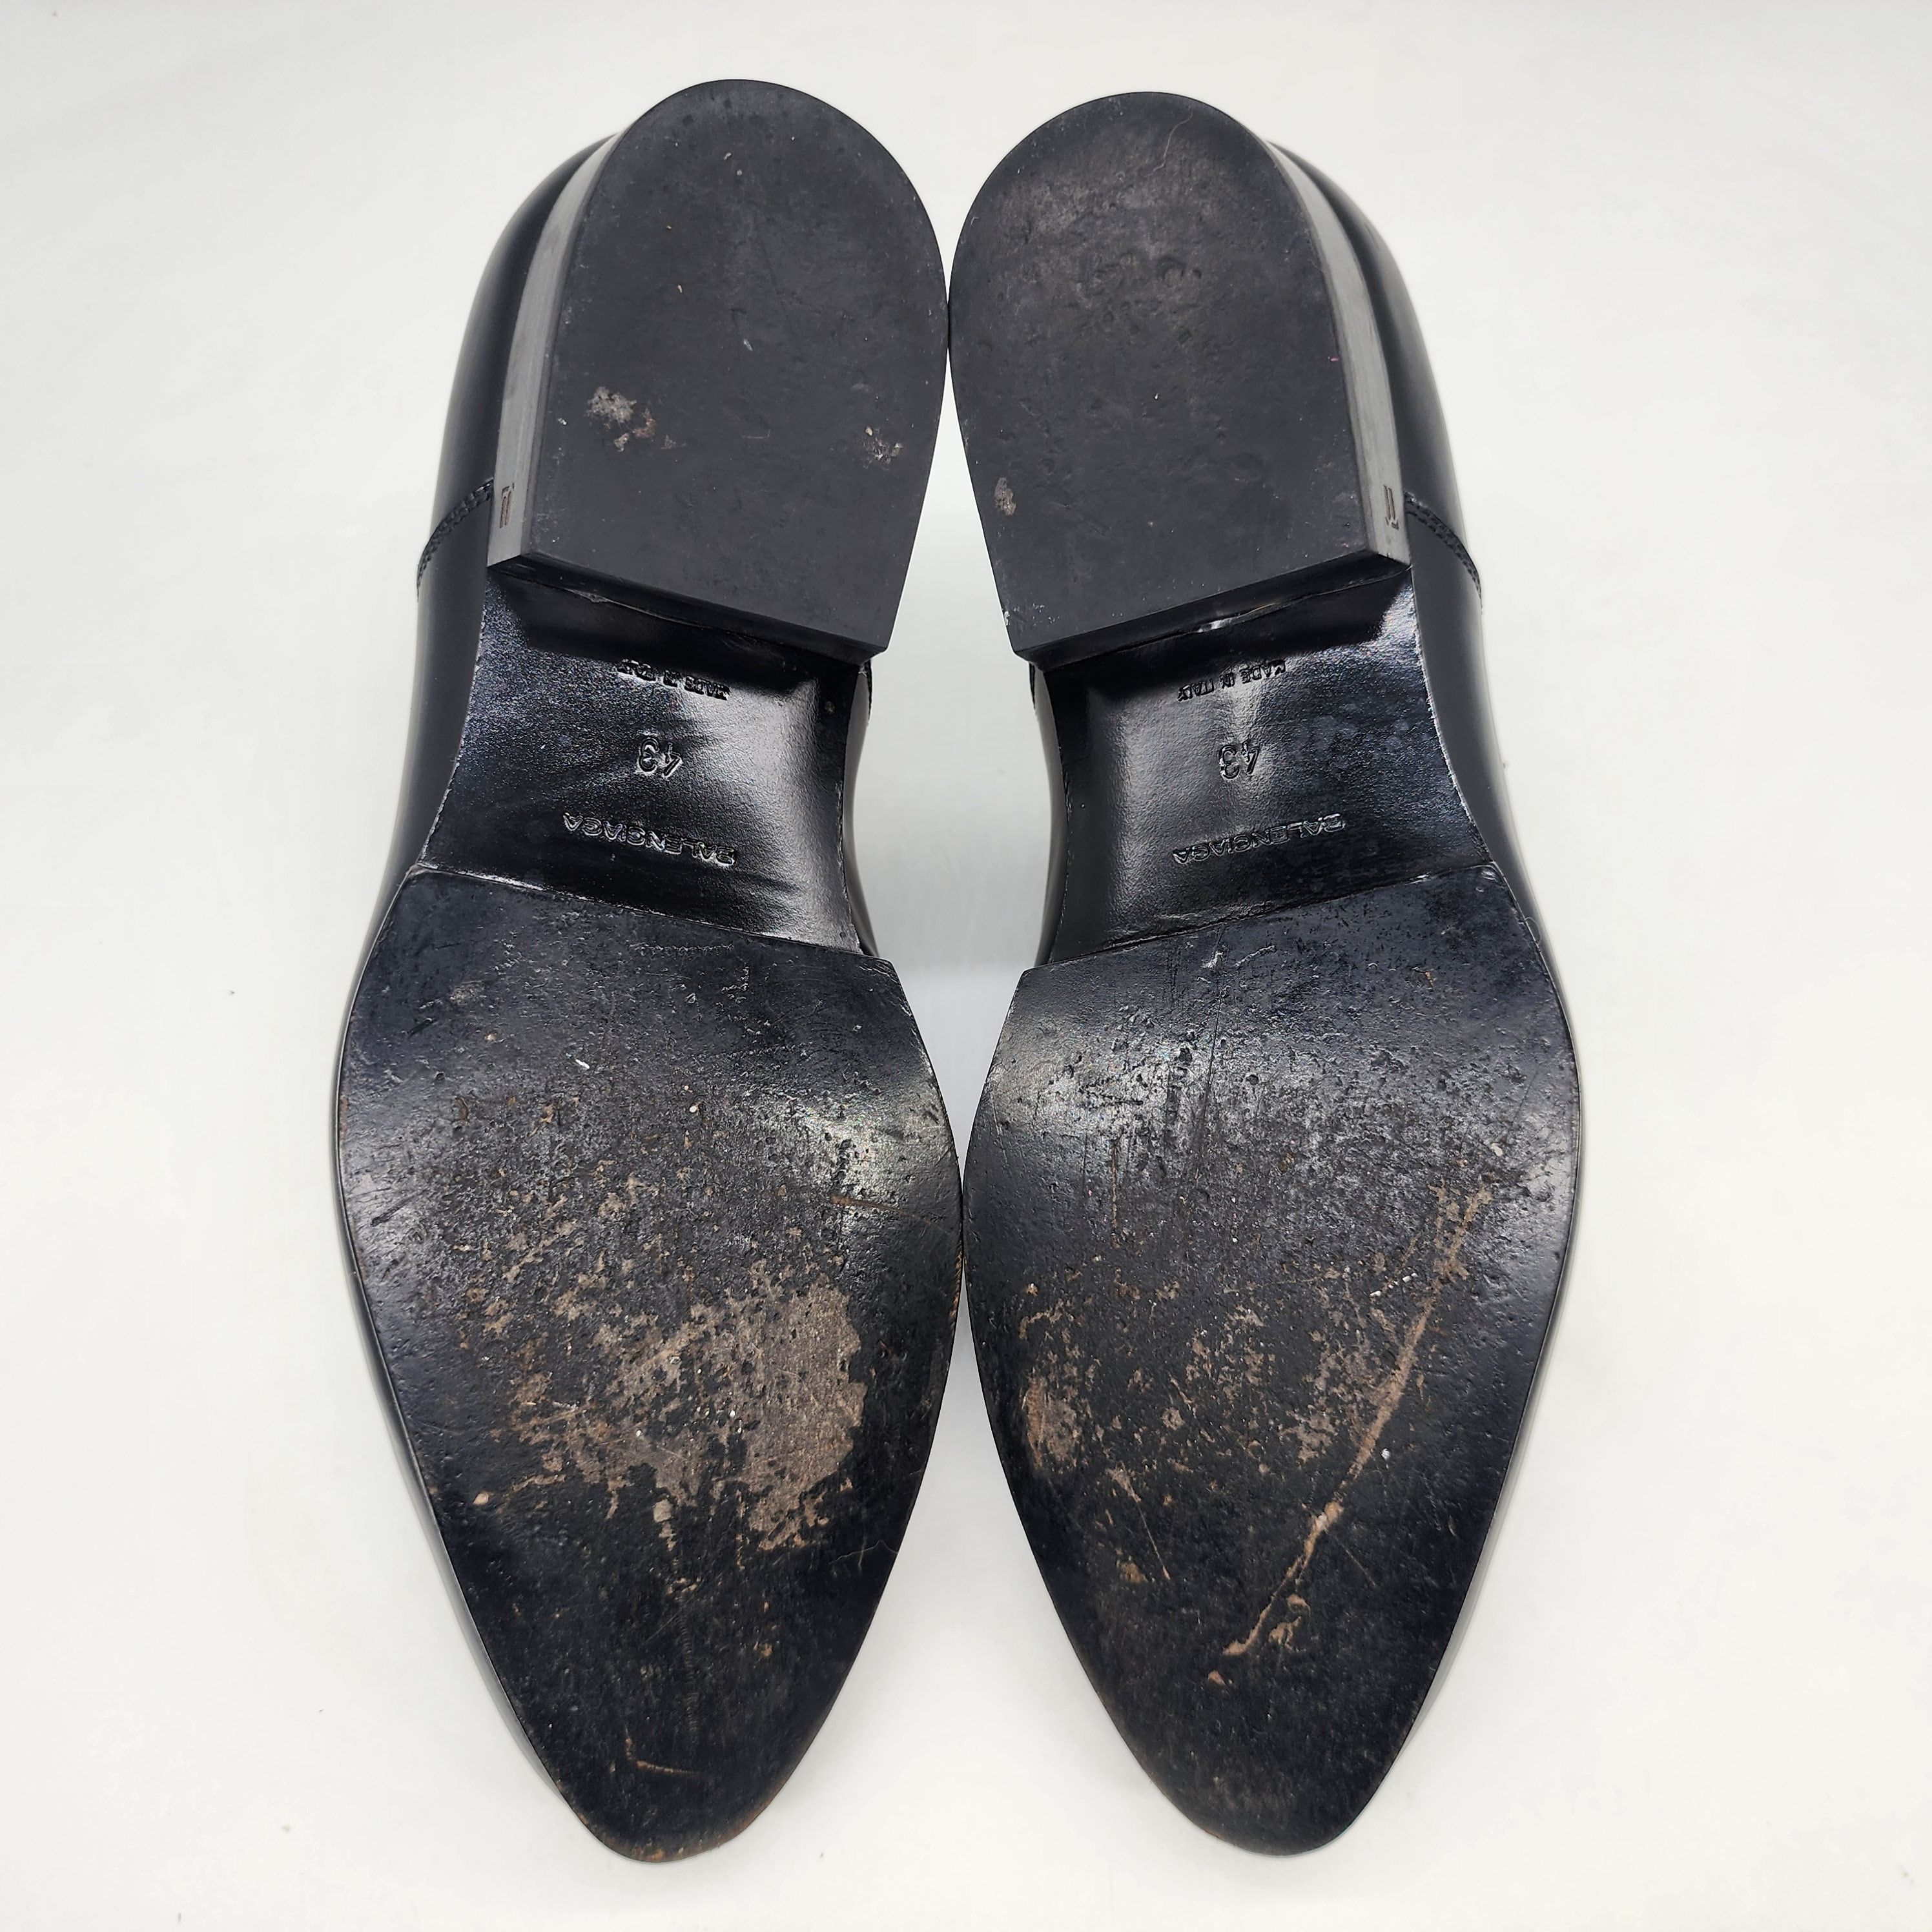 Balenciaga x Alexander Wang - Slip On Dress Shoes - 7